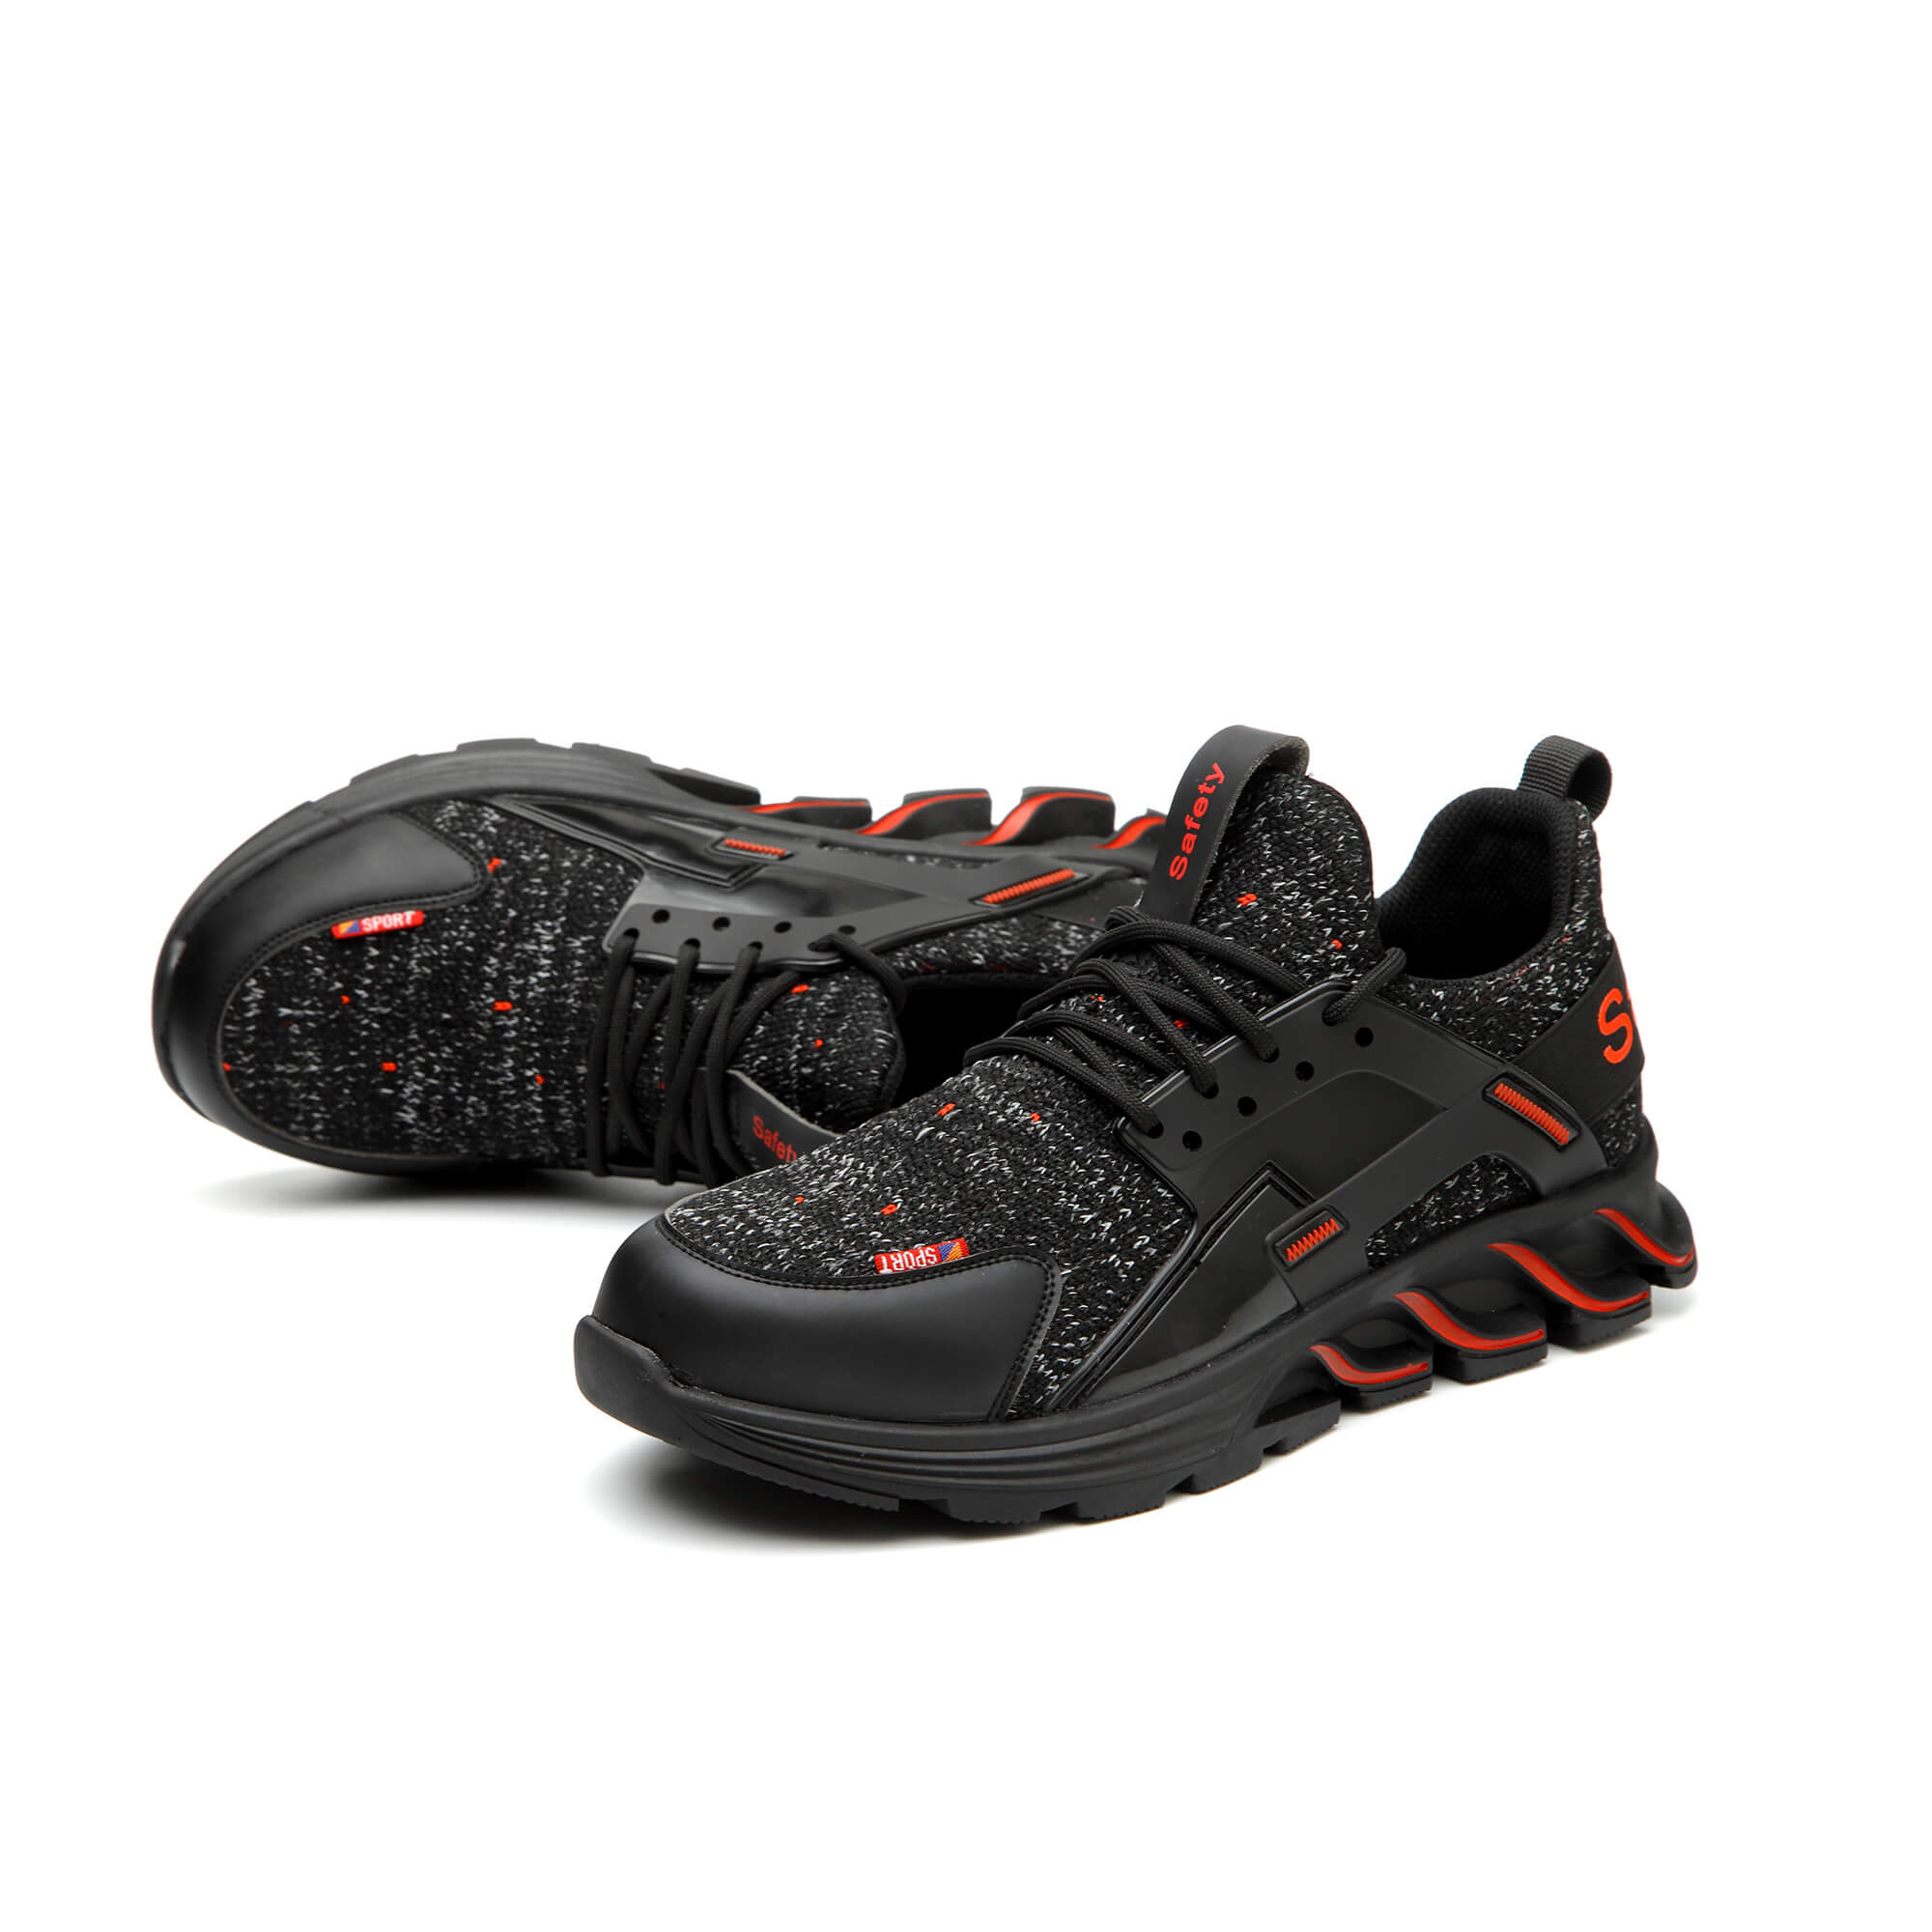 F19 BLACK RED Steel Toe Safety Shoes Lightweight for Men Women